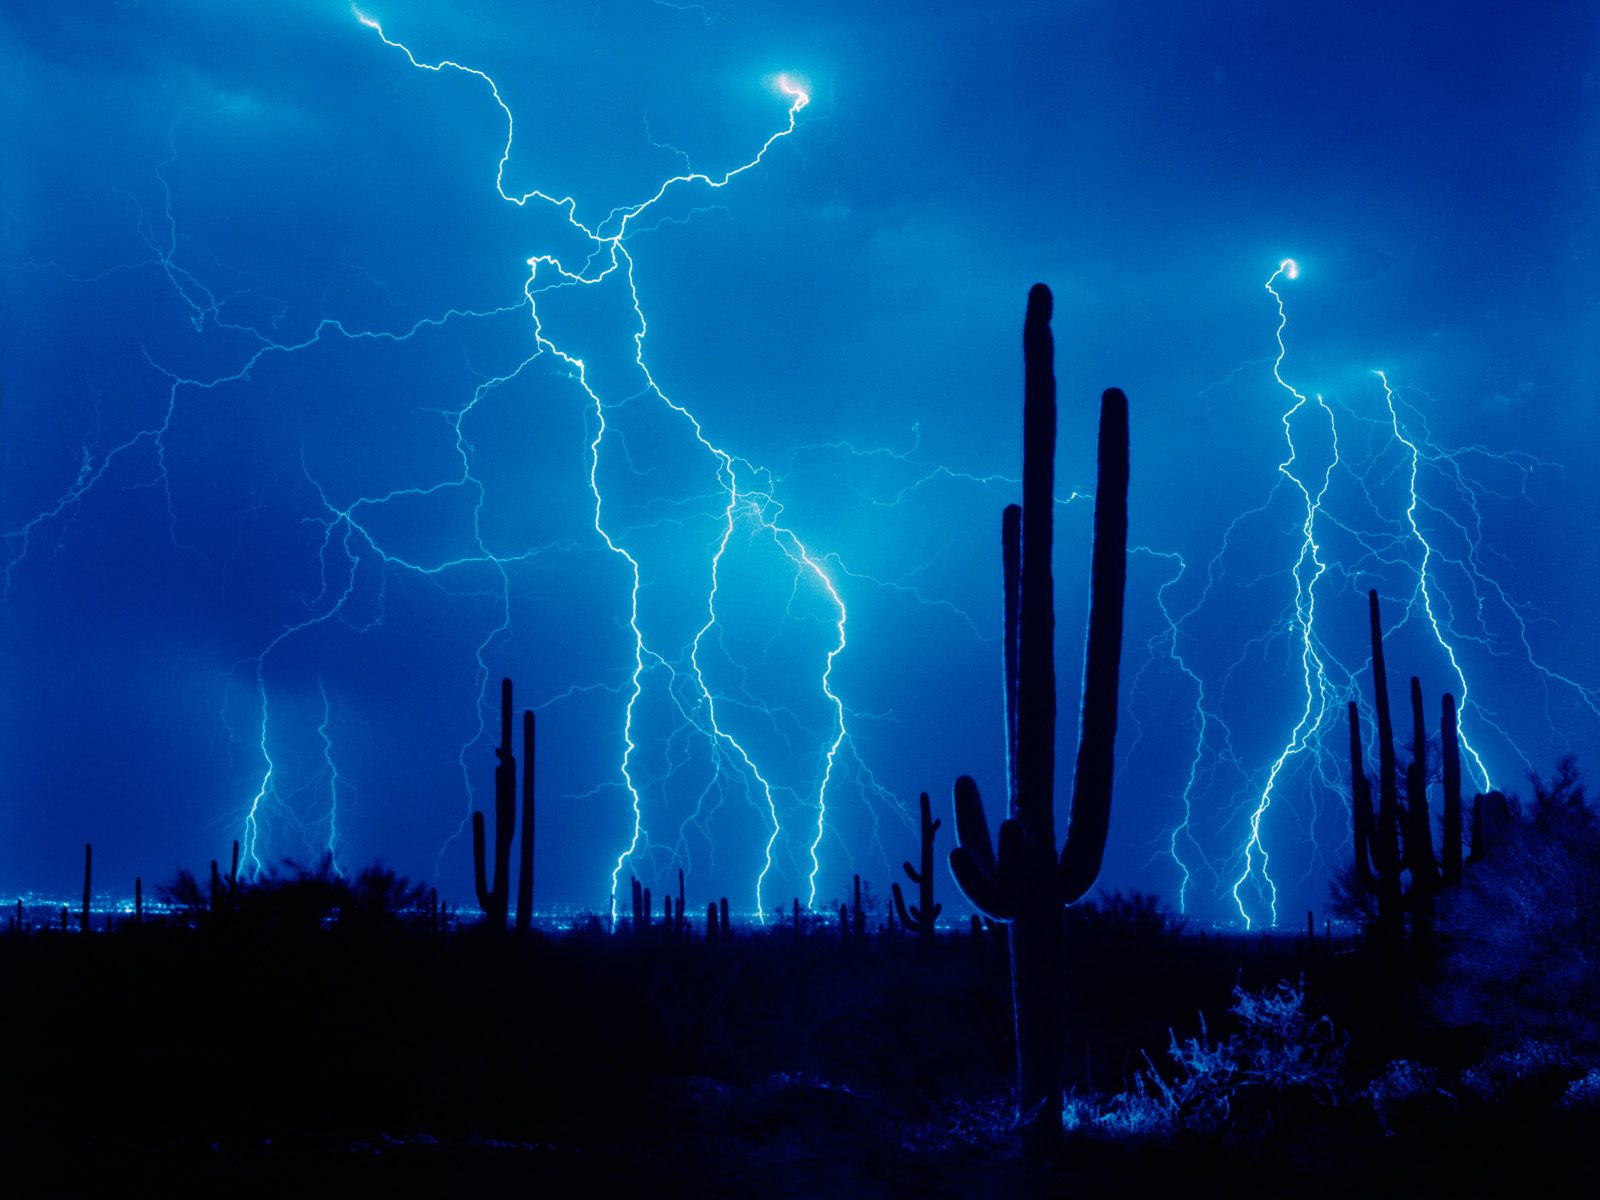 Desert Strike Weather Wallpaper Image Featuring Lightning